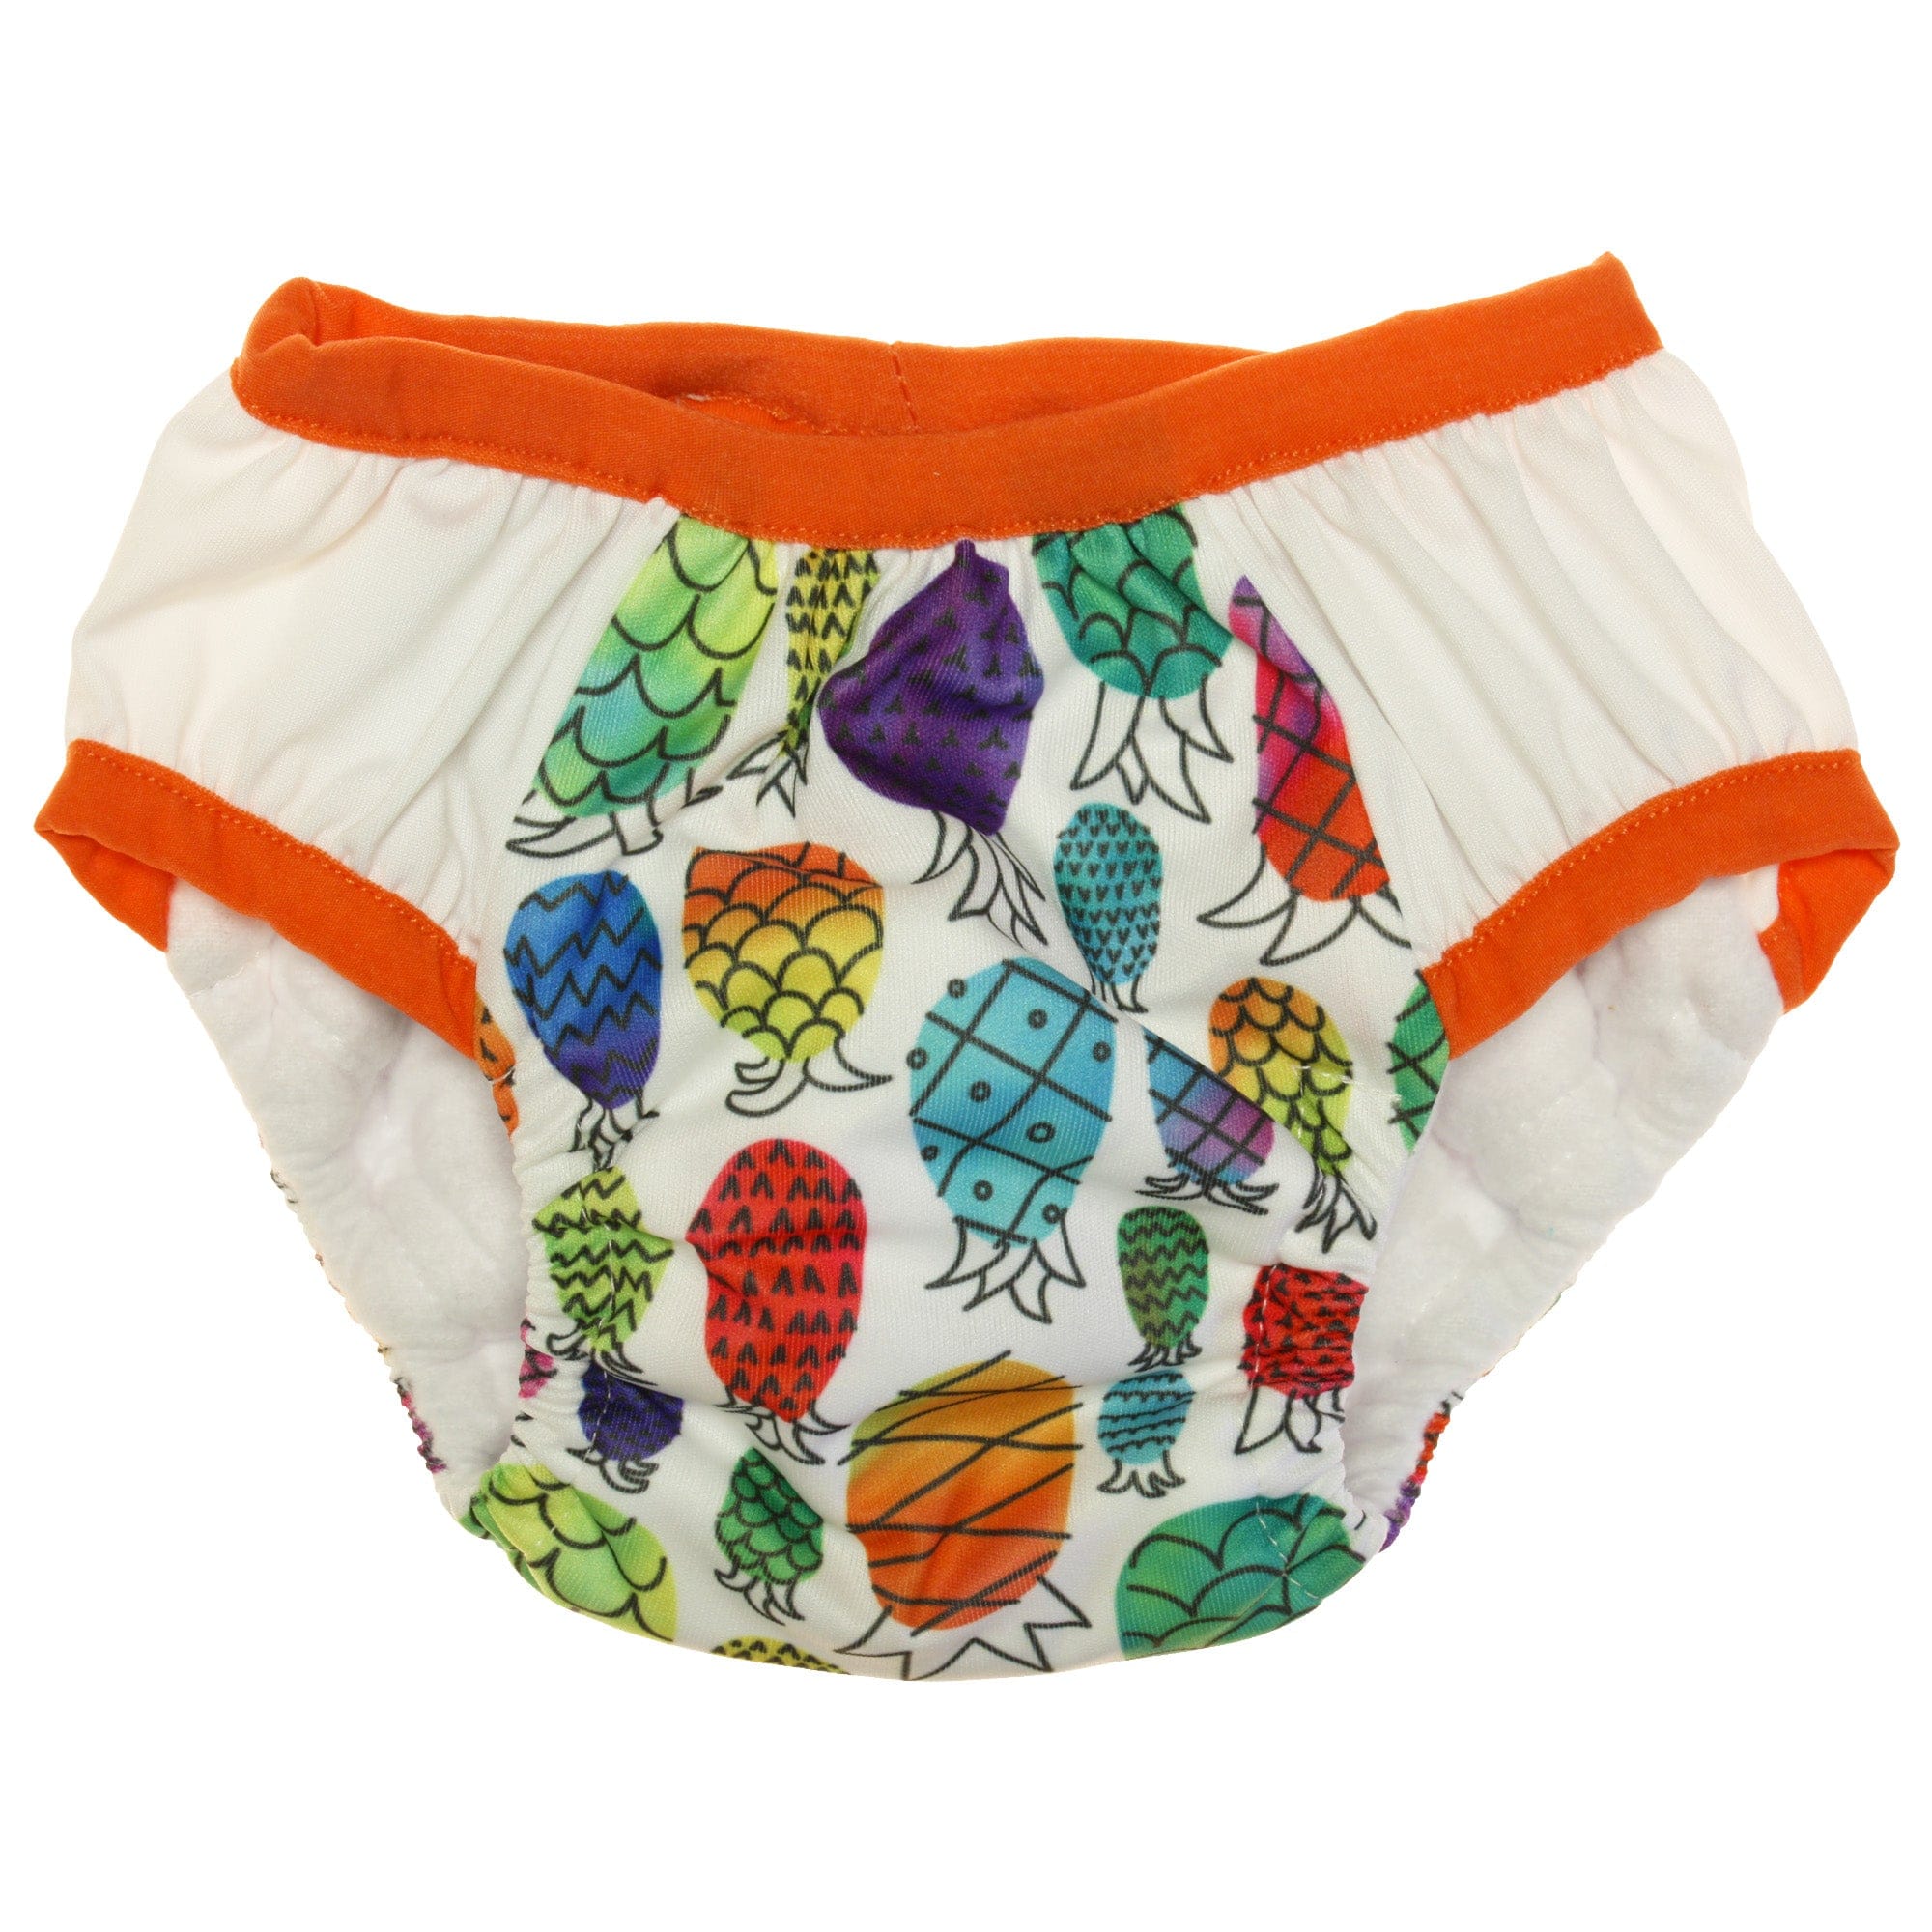 Nicki's Diapers Overnight Training Pant Small / Pineapple Paradise